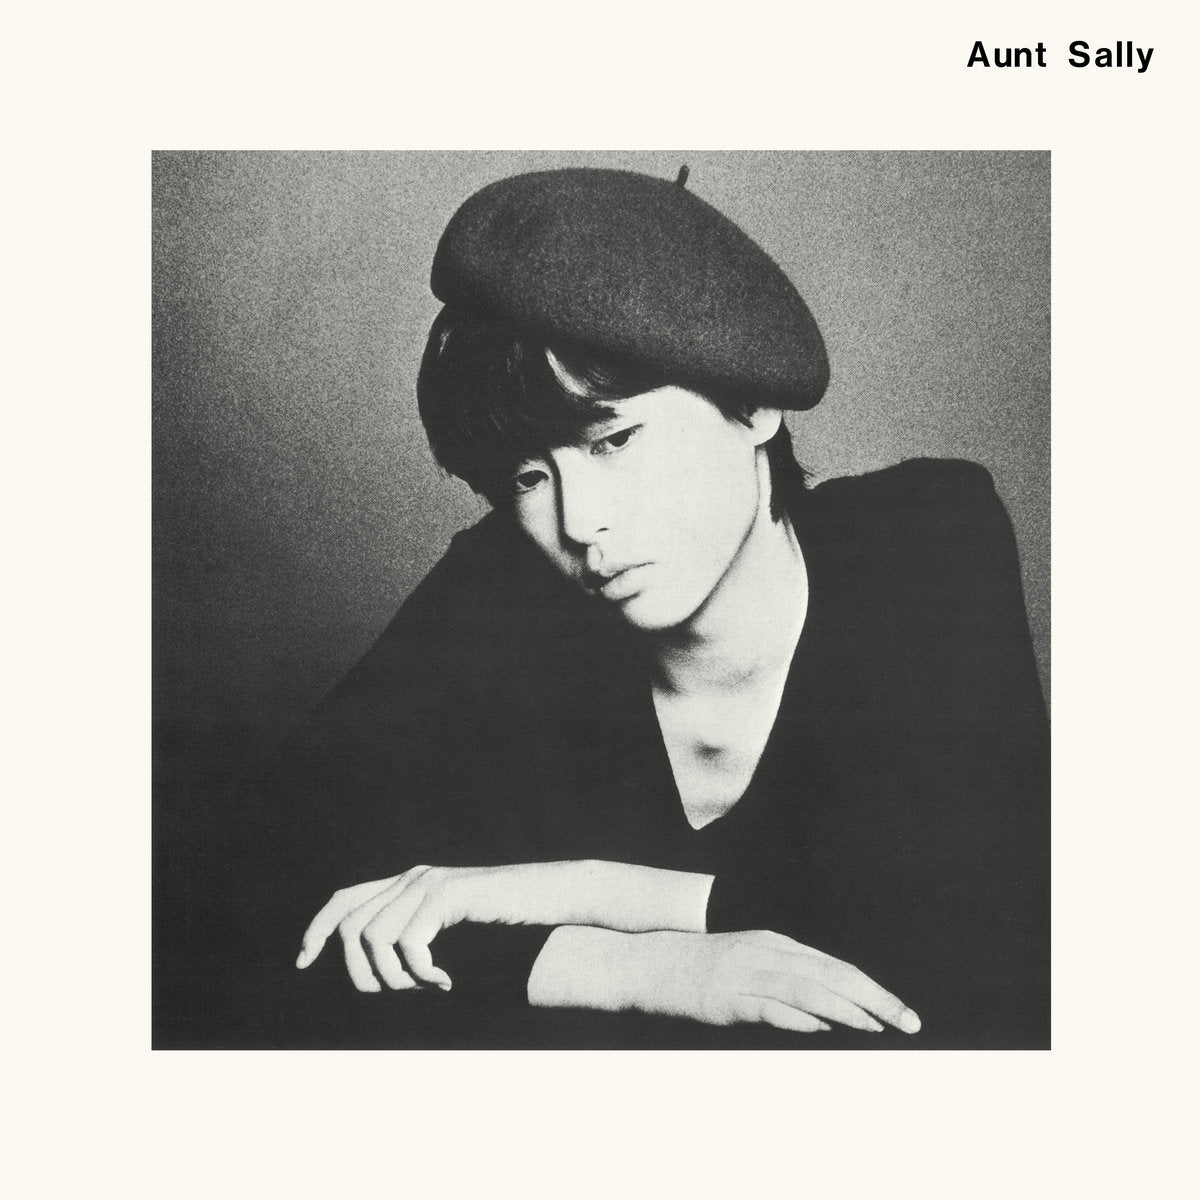 AUNT SALLY - "AUNT SALLY" LP + 7"